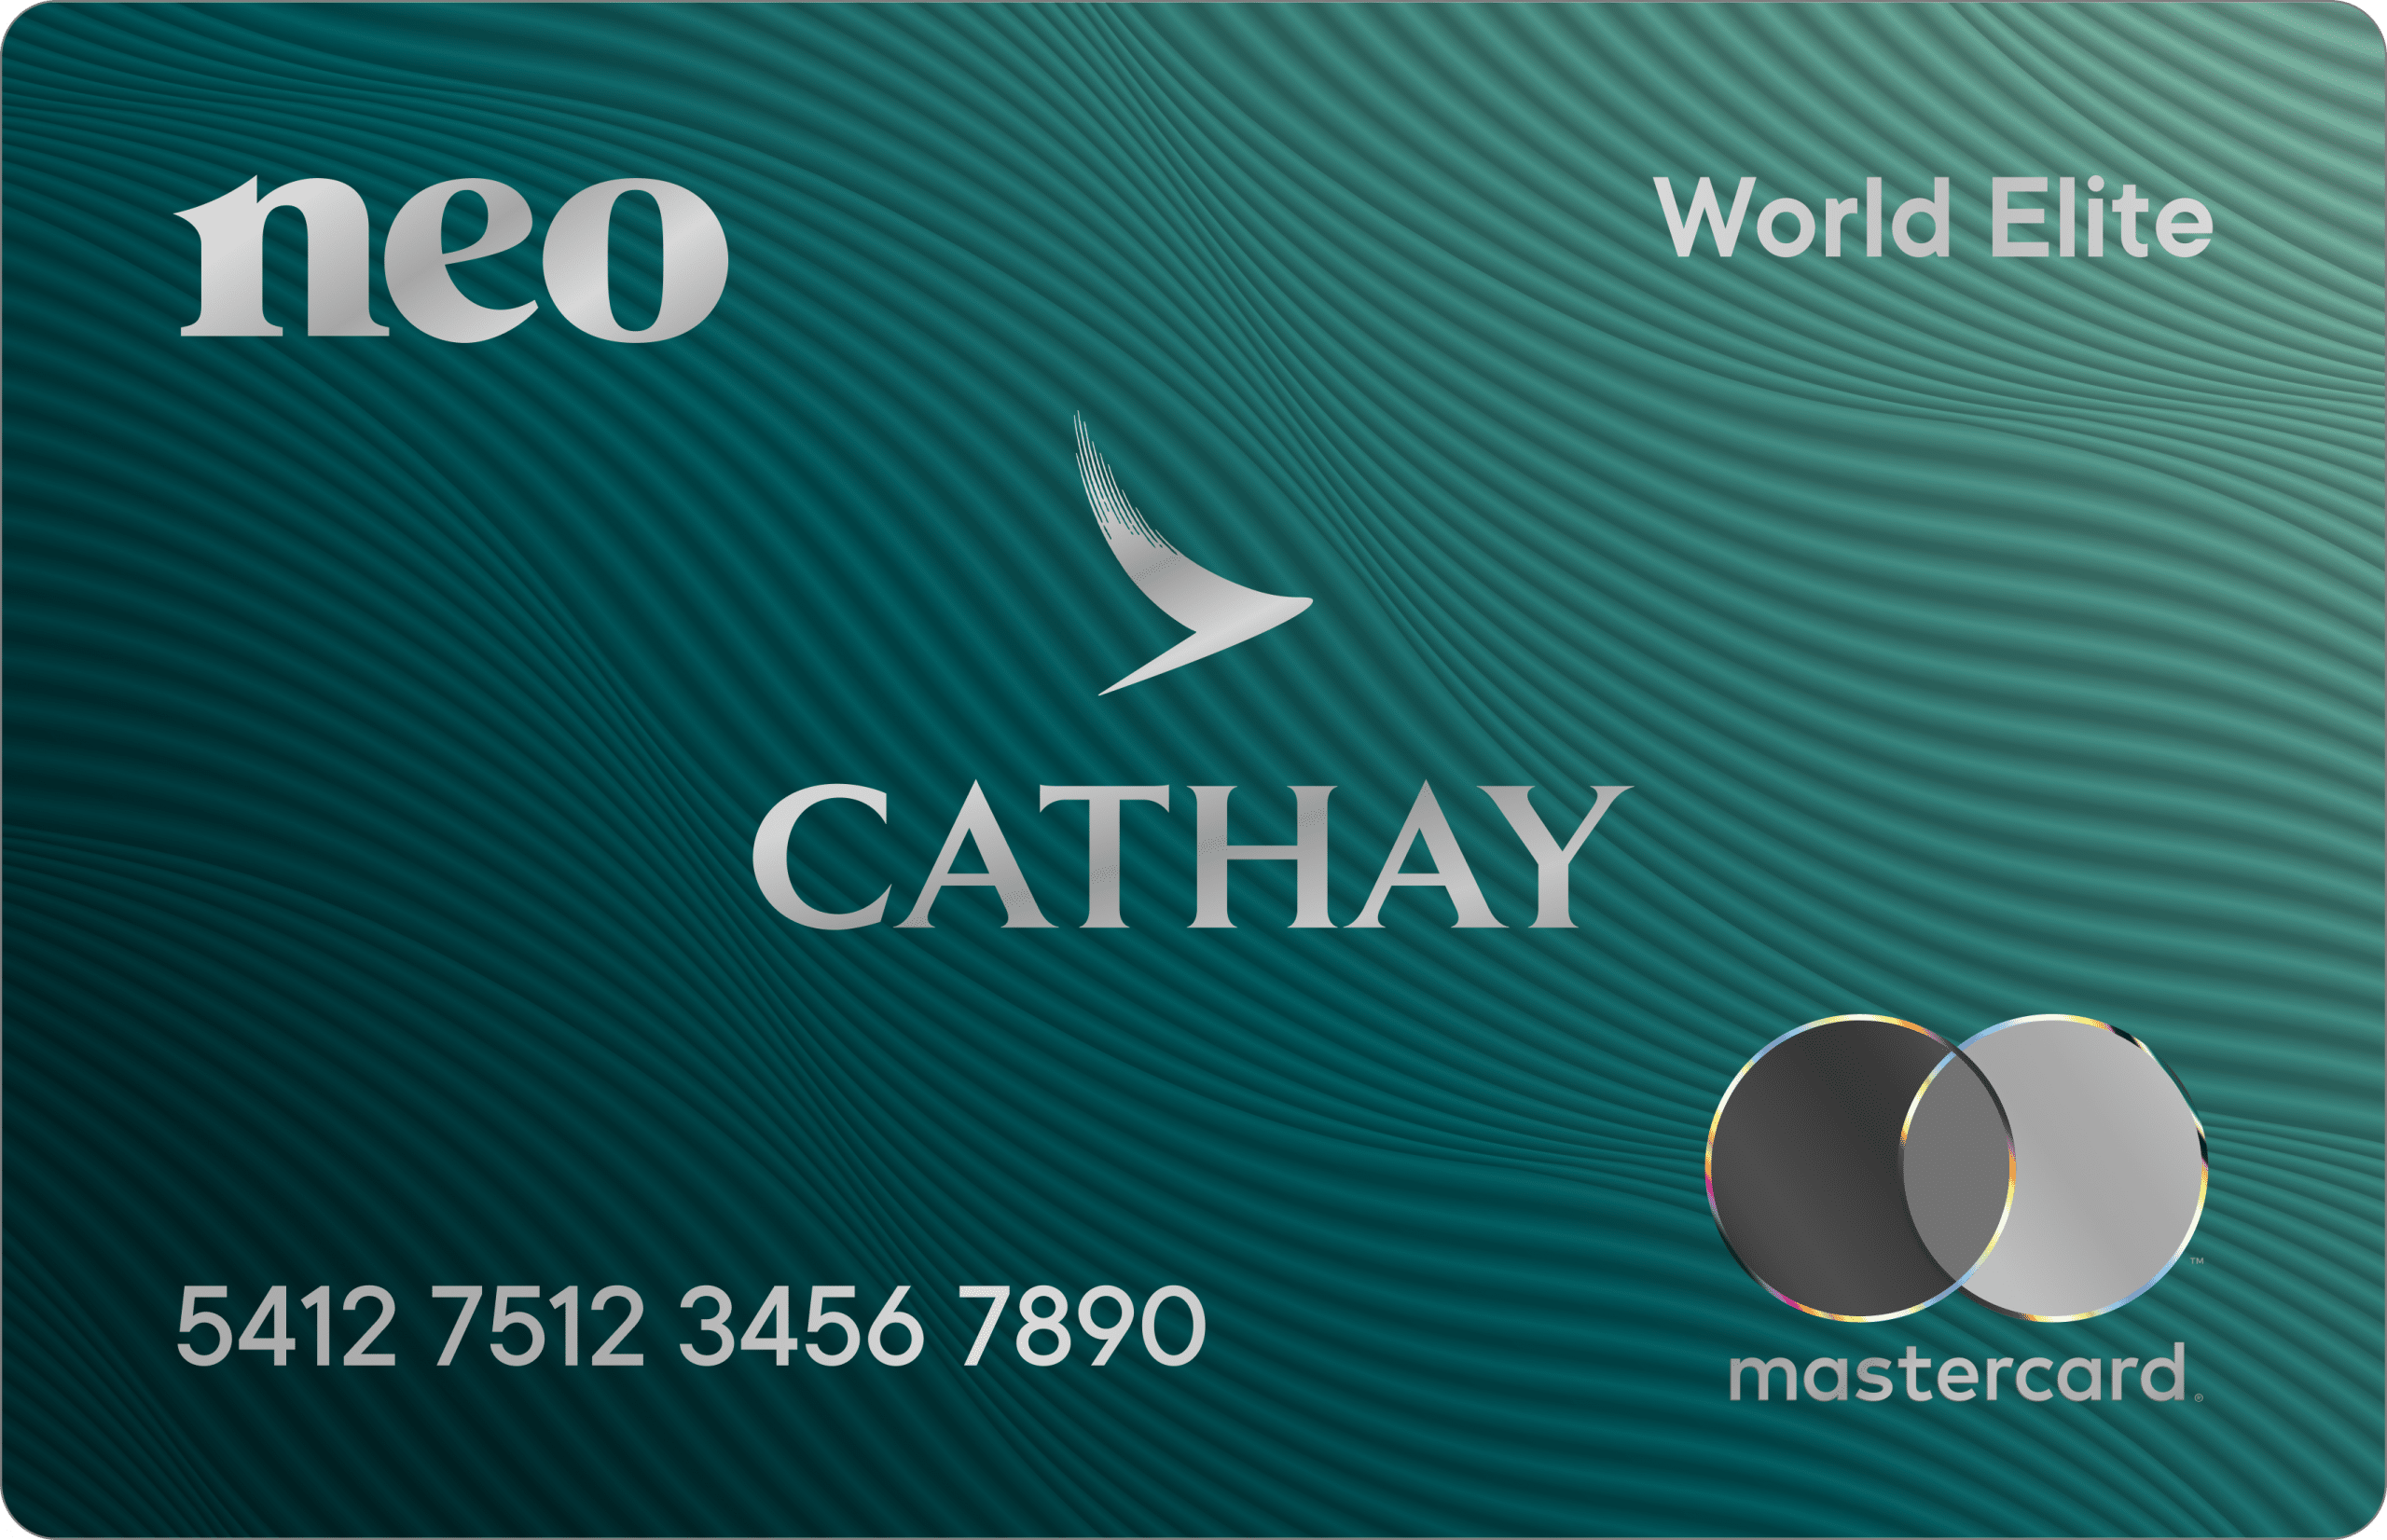 Cathay World Elite